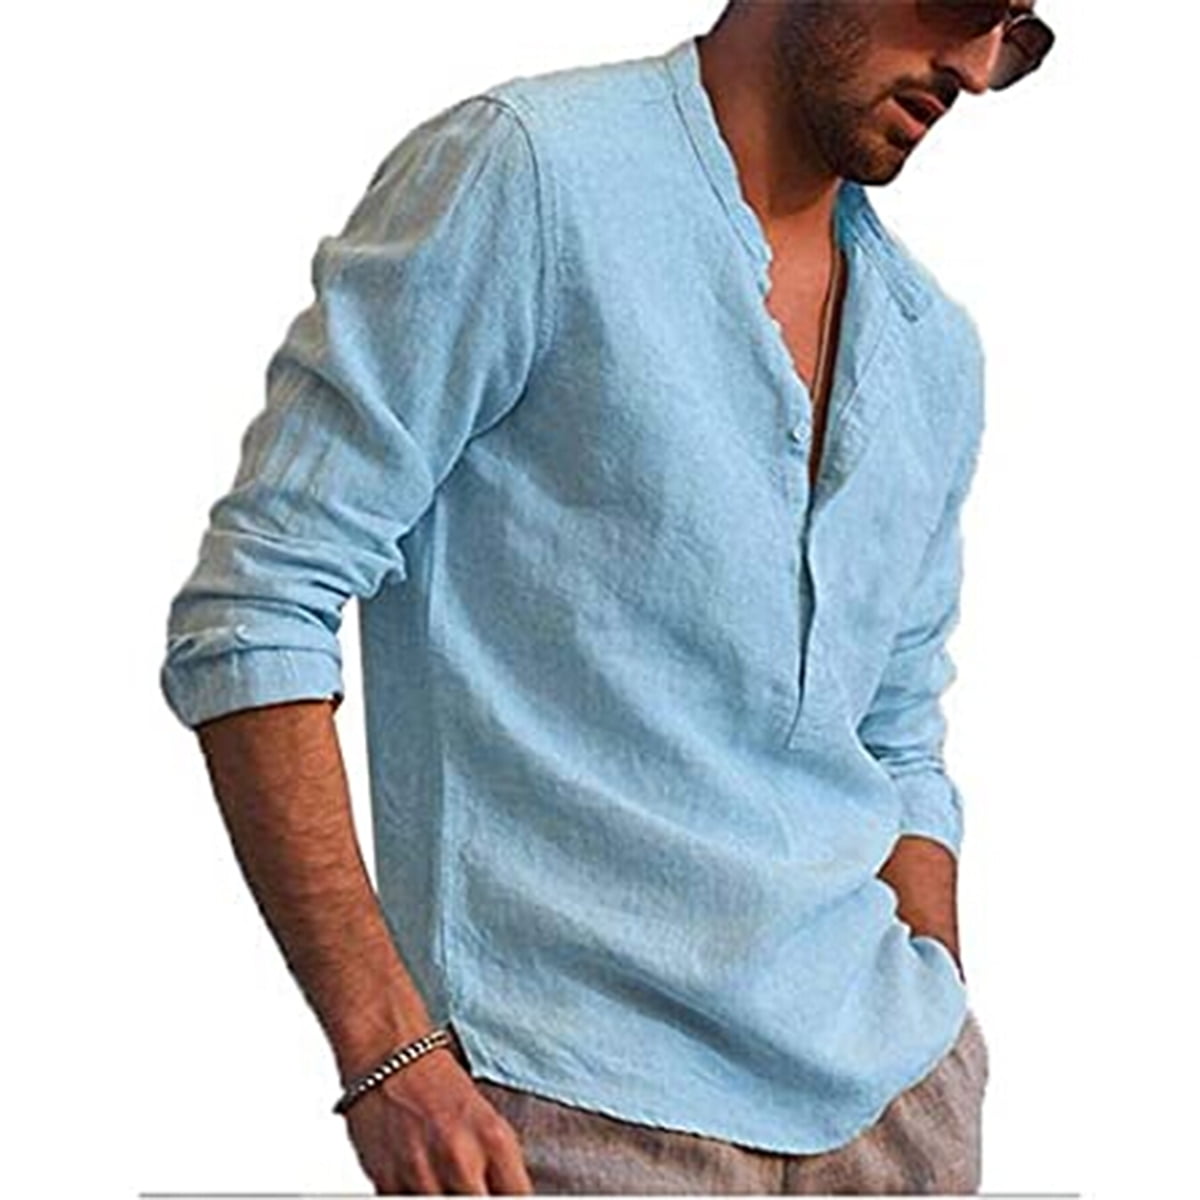 NITAGUT Men’s Casual Henley Shirt Long Sleeve Cotton Soft Plain T-Shirt Stretch Fit Crew Neck Basic Shirts 